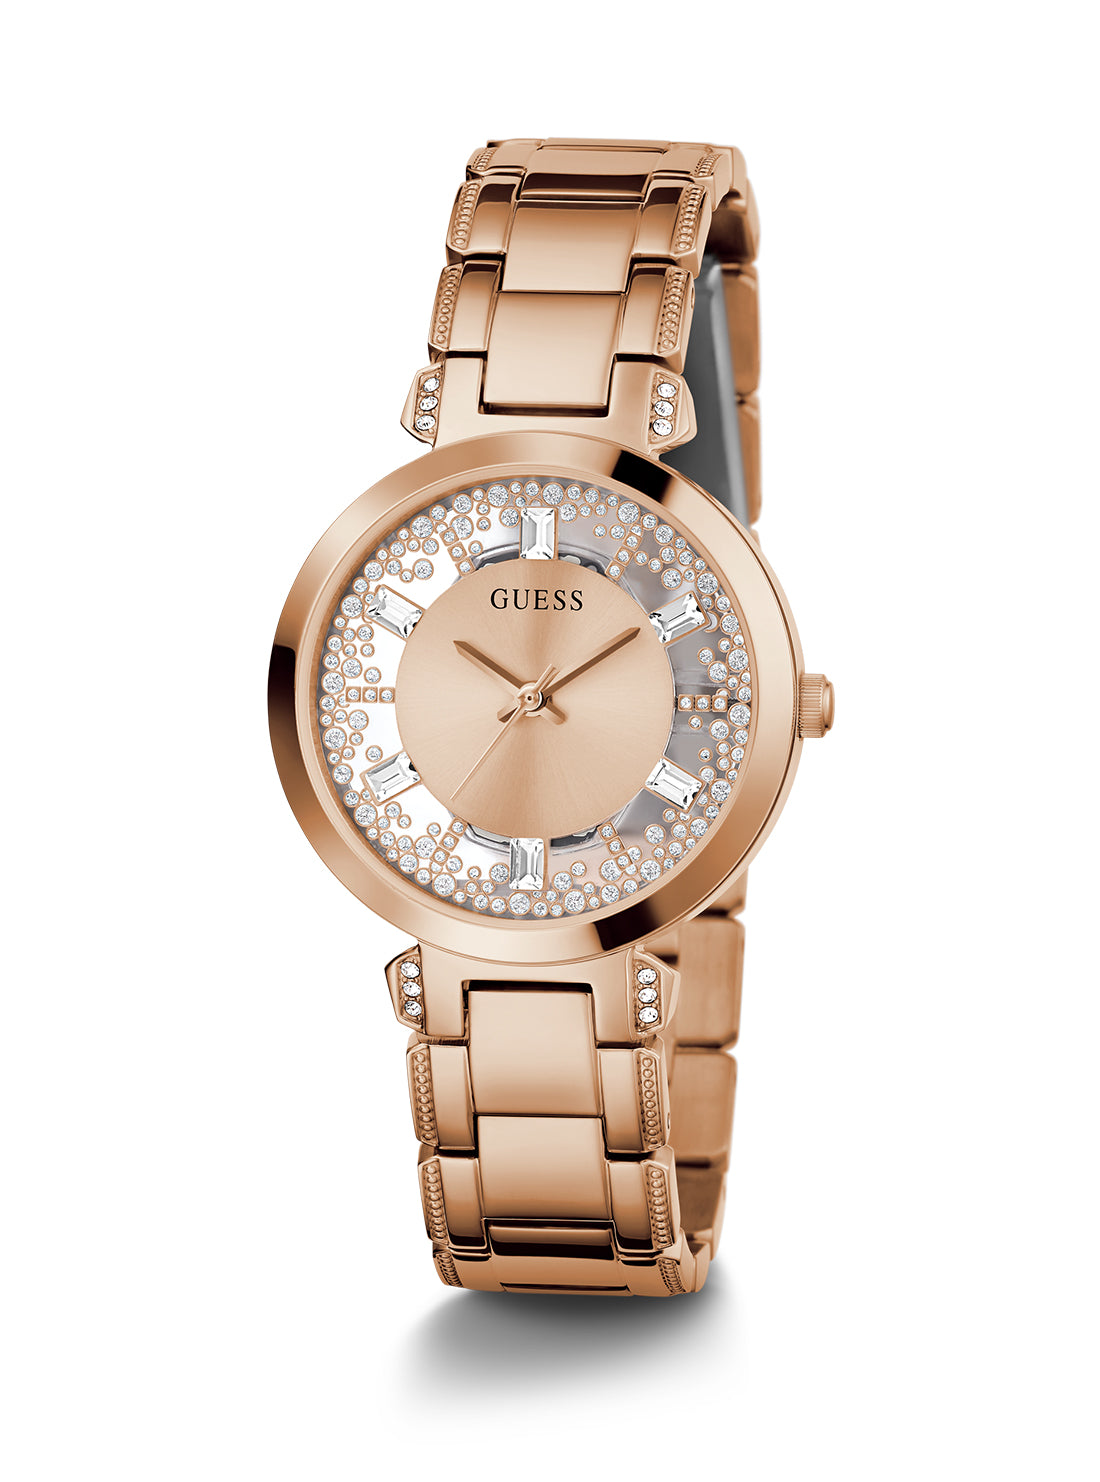 GUESS Women's Rose Gold Crystal Clear Glitz Watch GW0470L3 Full View